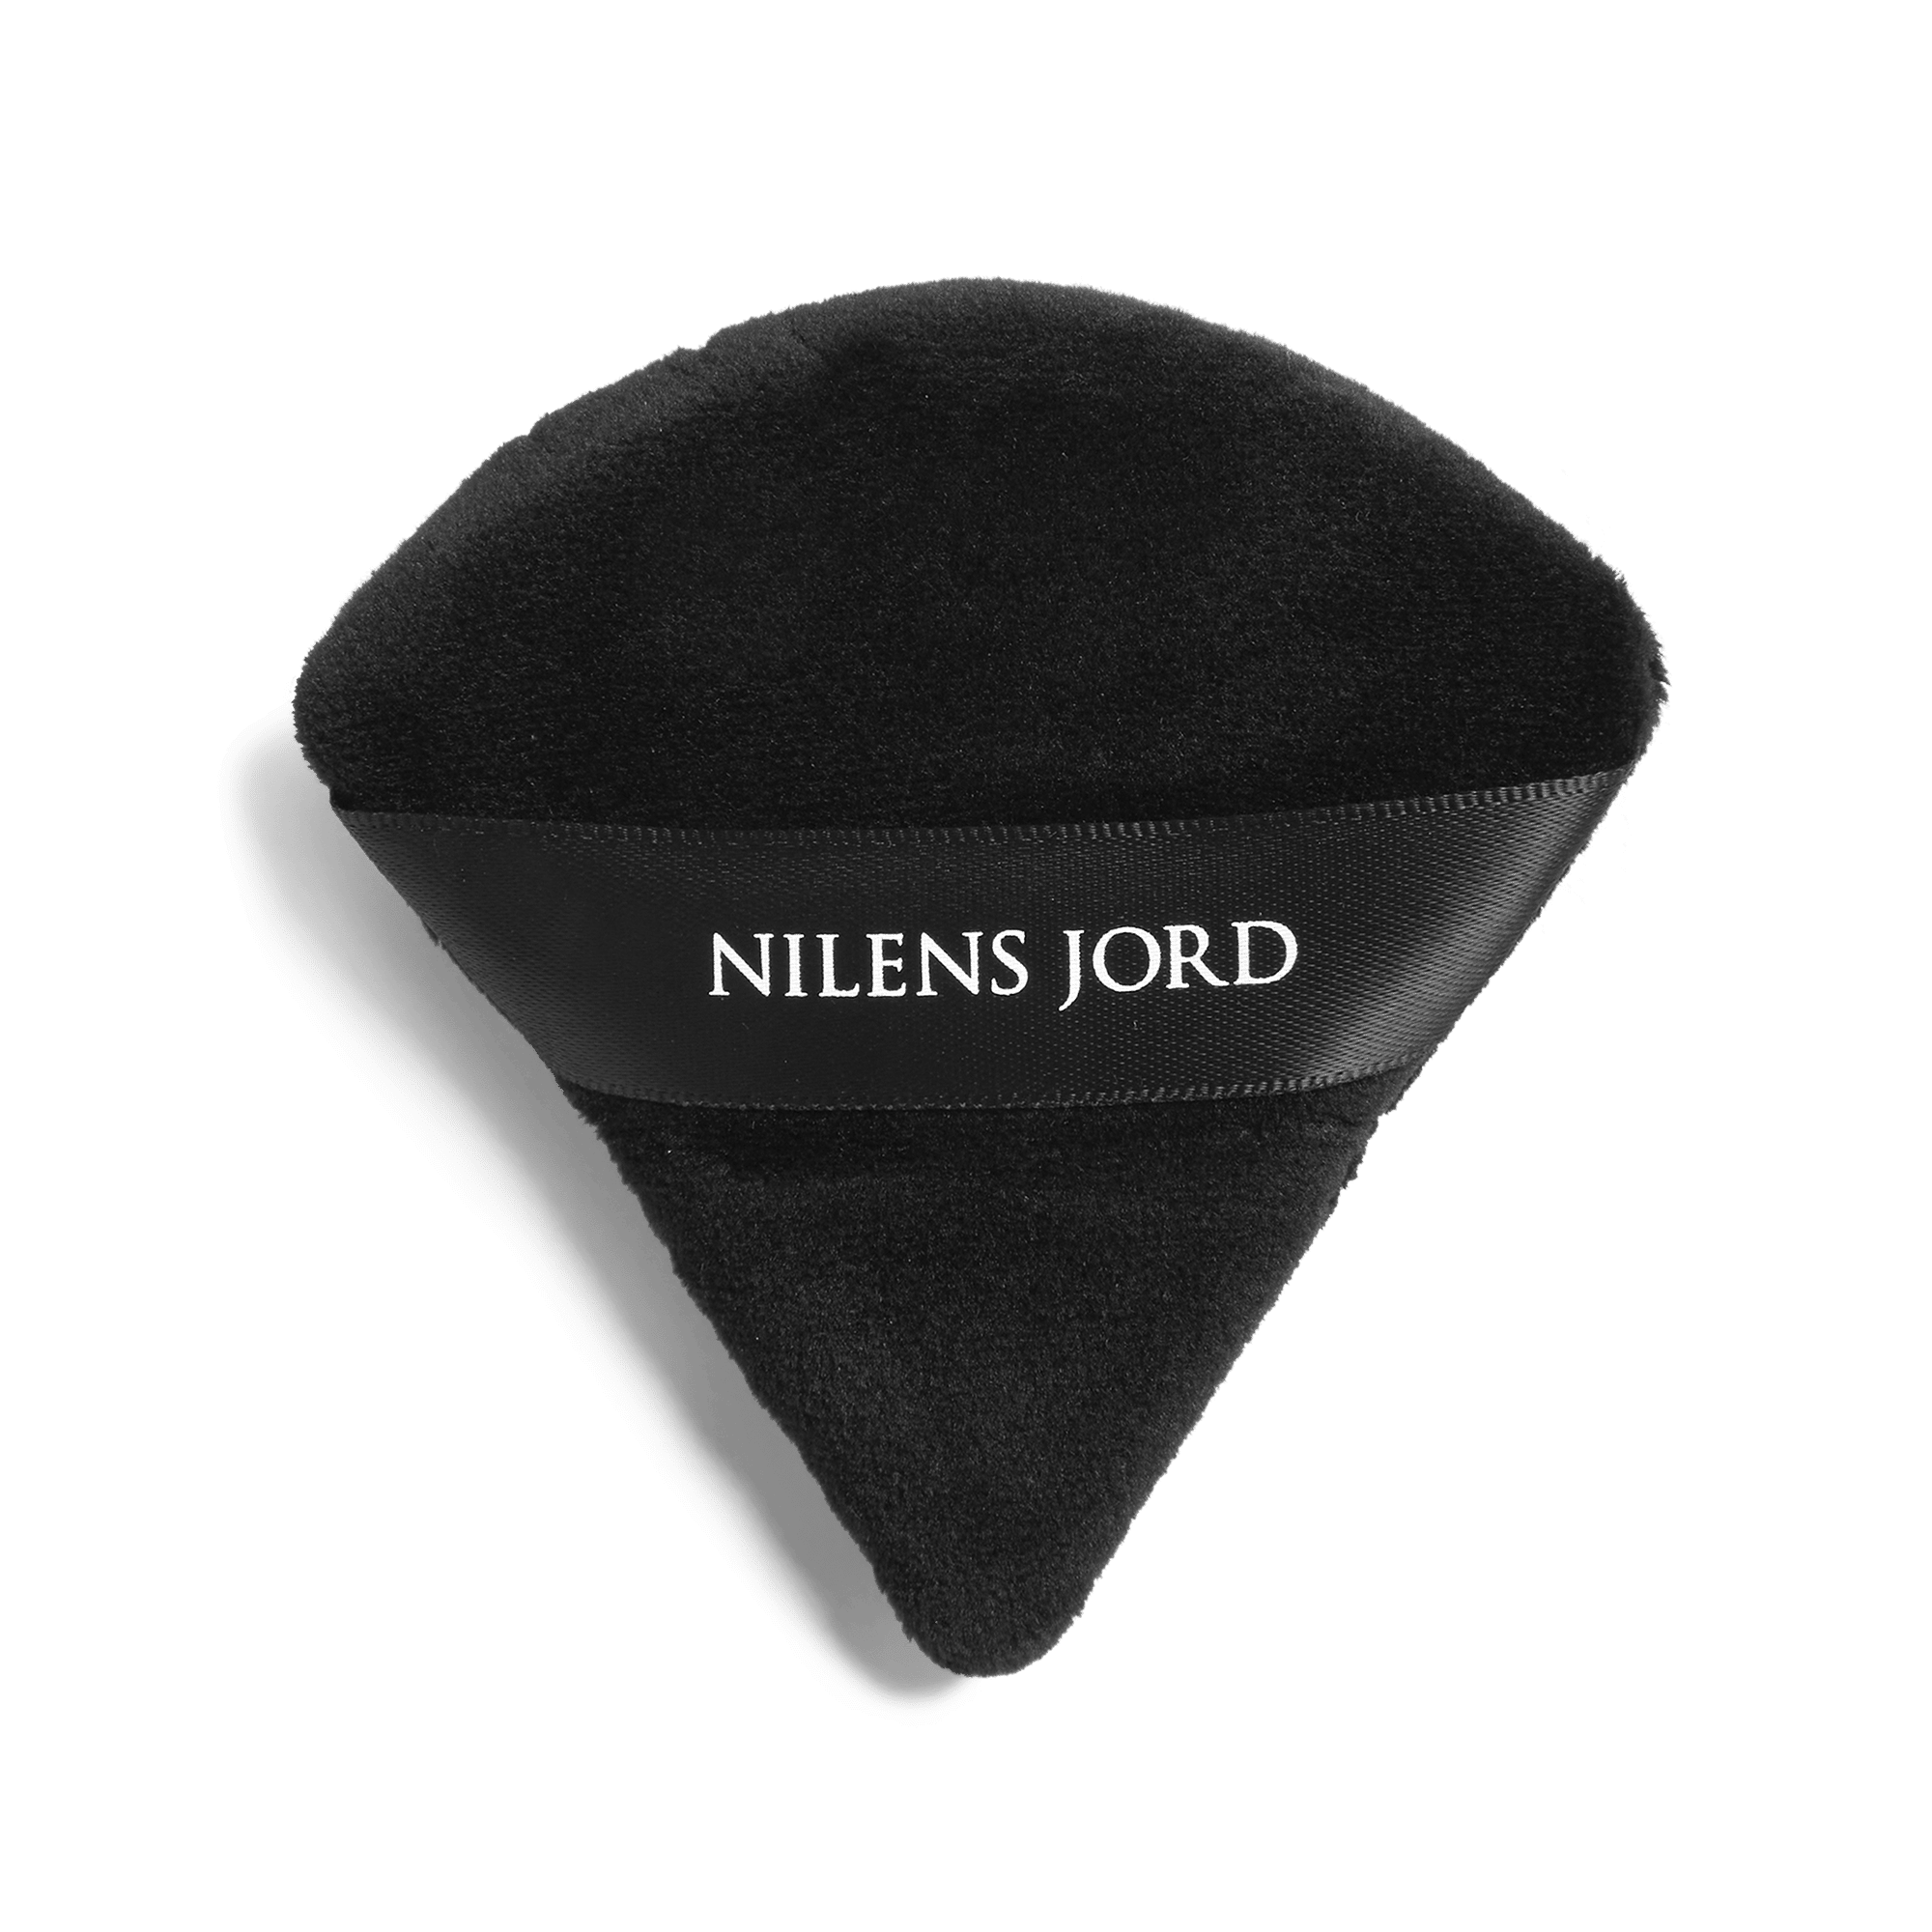 Nilens Jord - Powder Puff